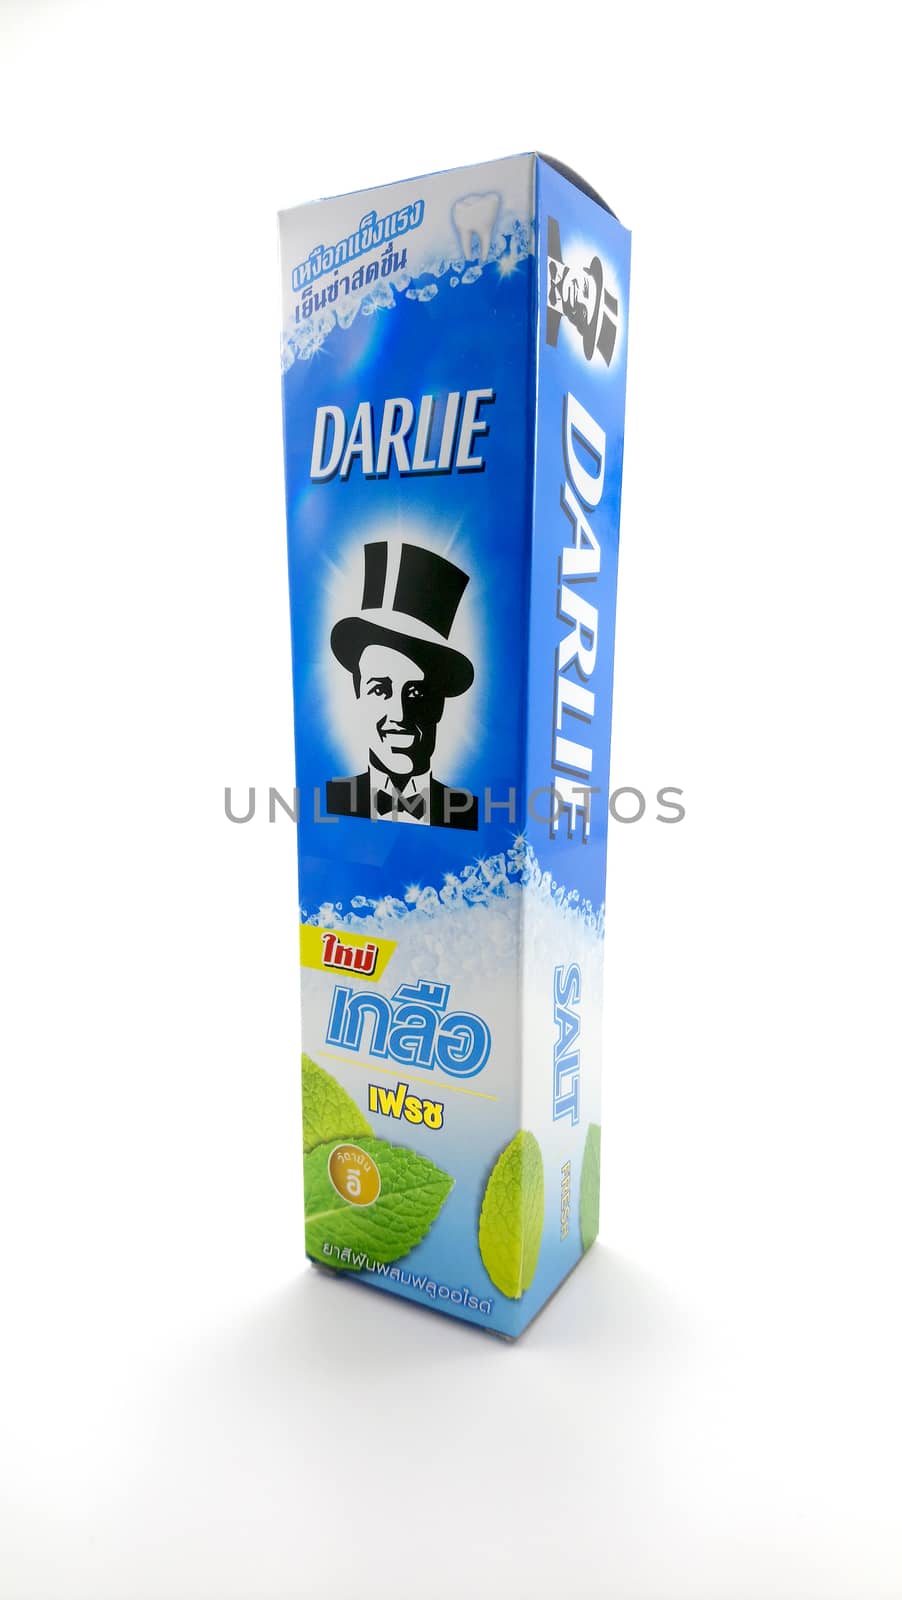 MANILA, PH - JUNE 23 - Darlie salt toothpaste on June 23, 2020 in Manila, Philippines.